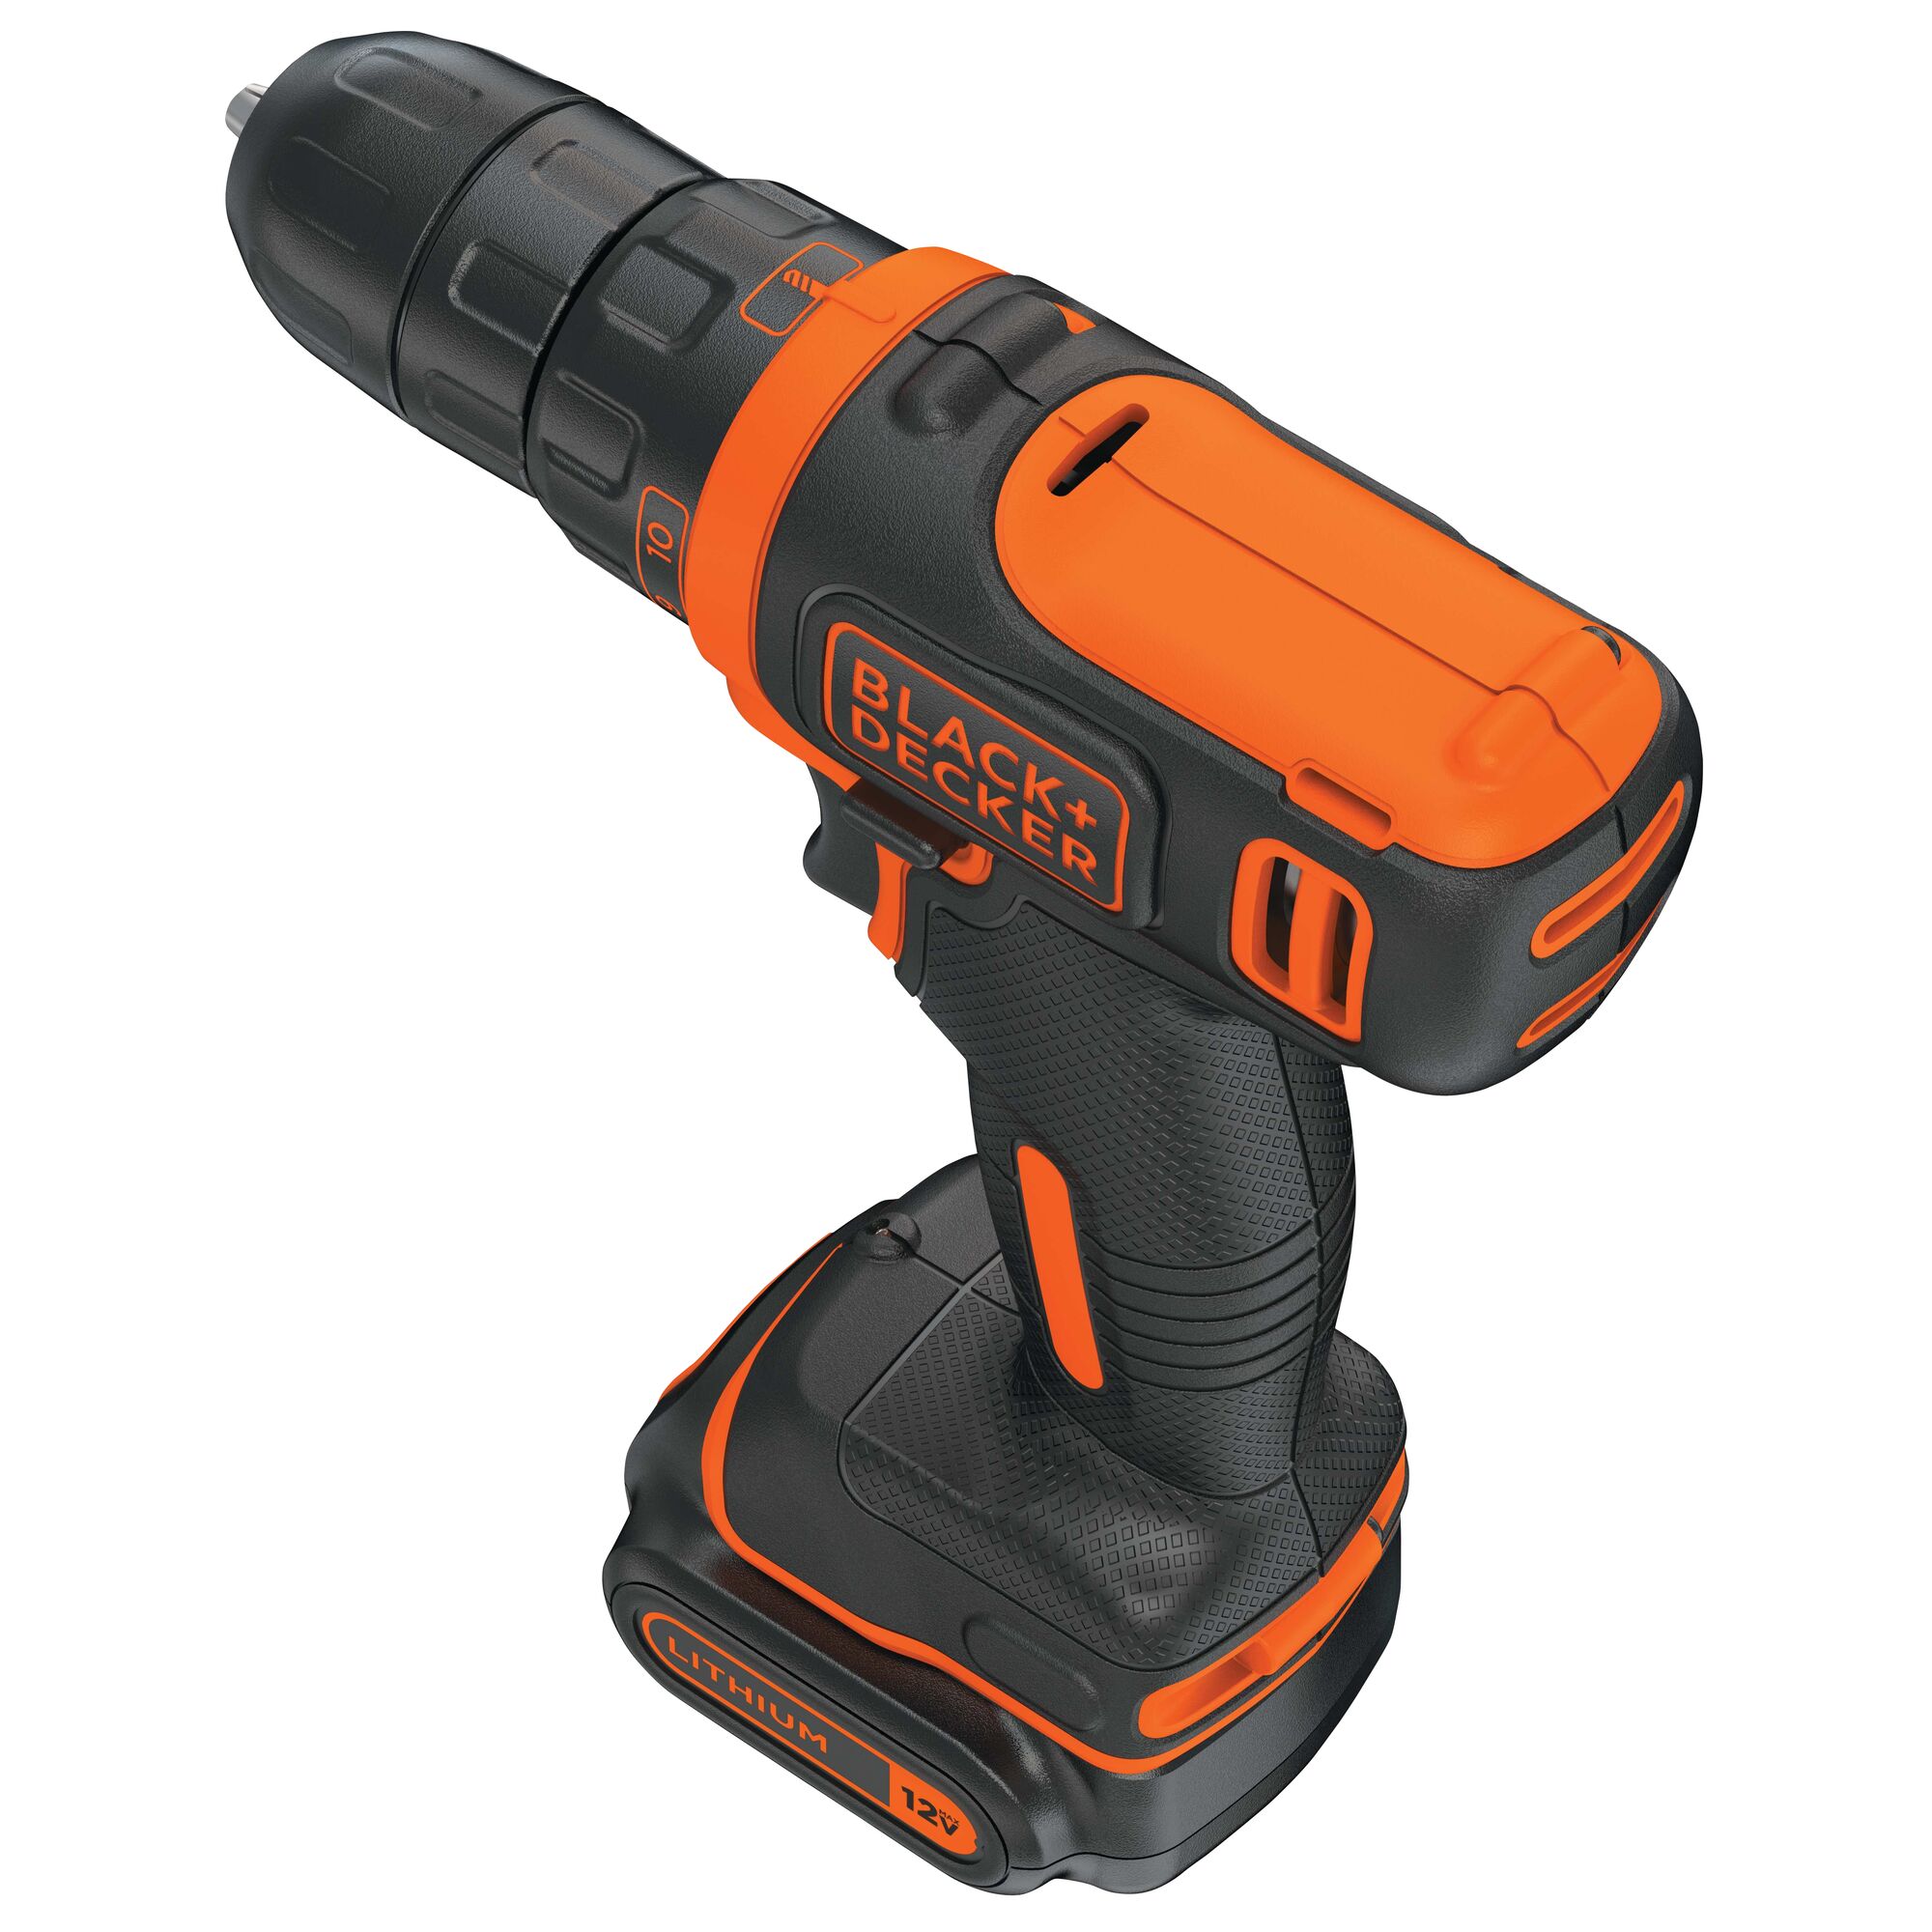 Profile image of the orange and black 12V drill